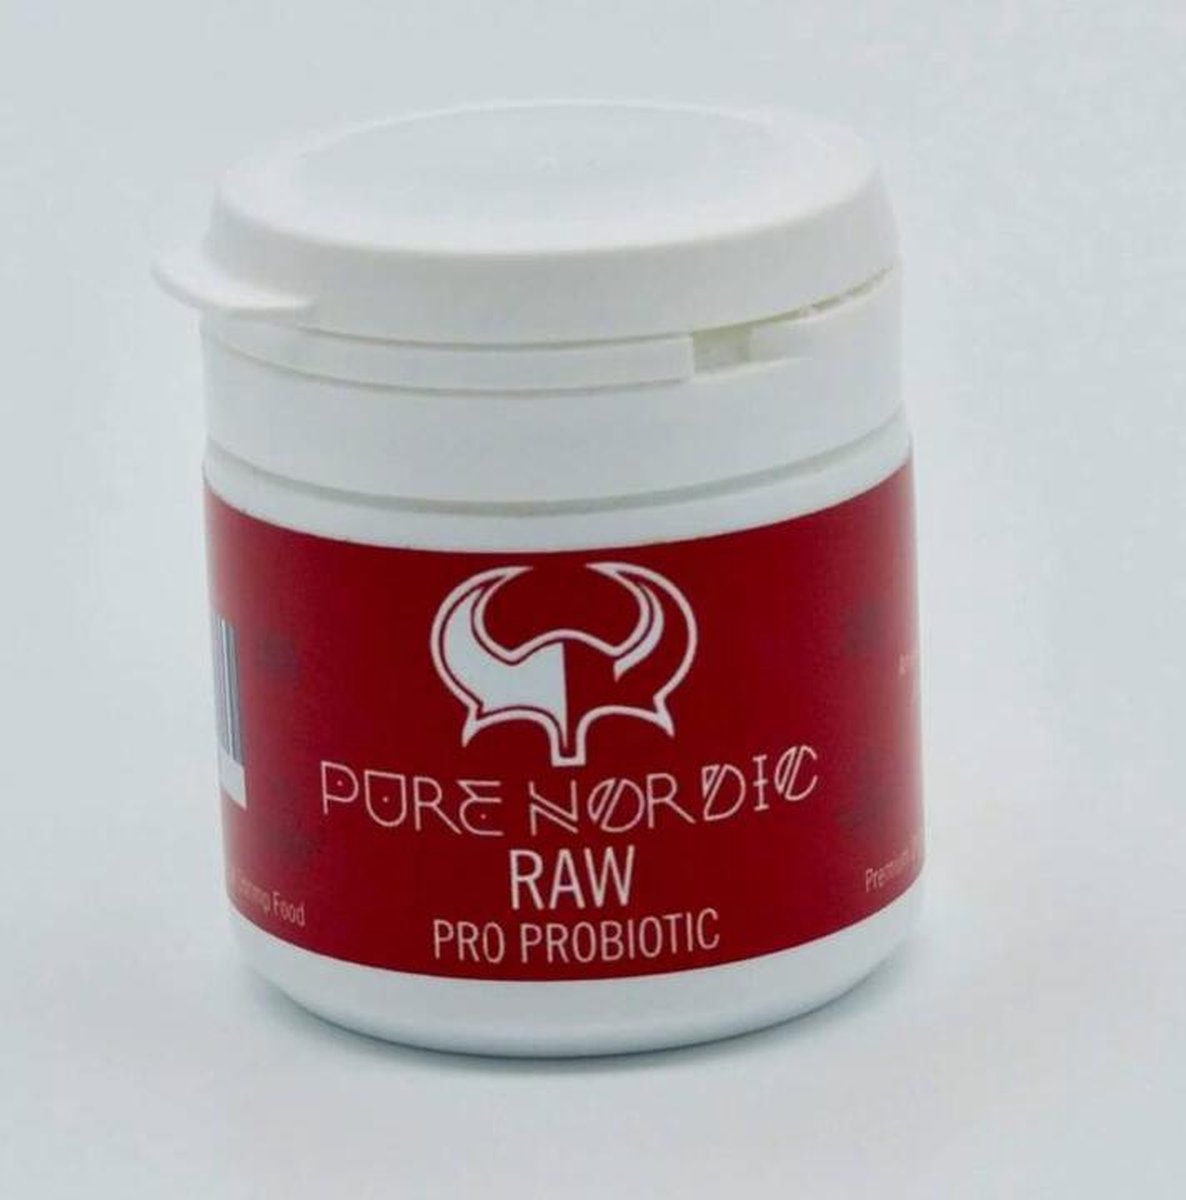 Pure Nordic RAW pro probiotic garnalenvoer